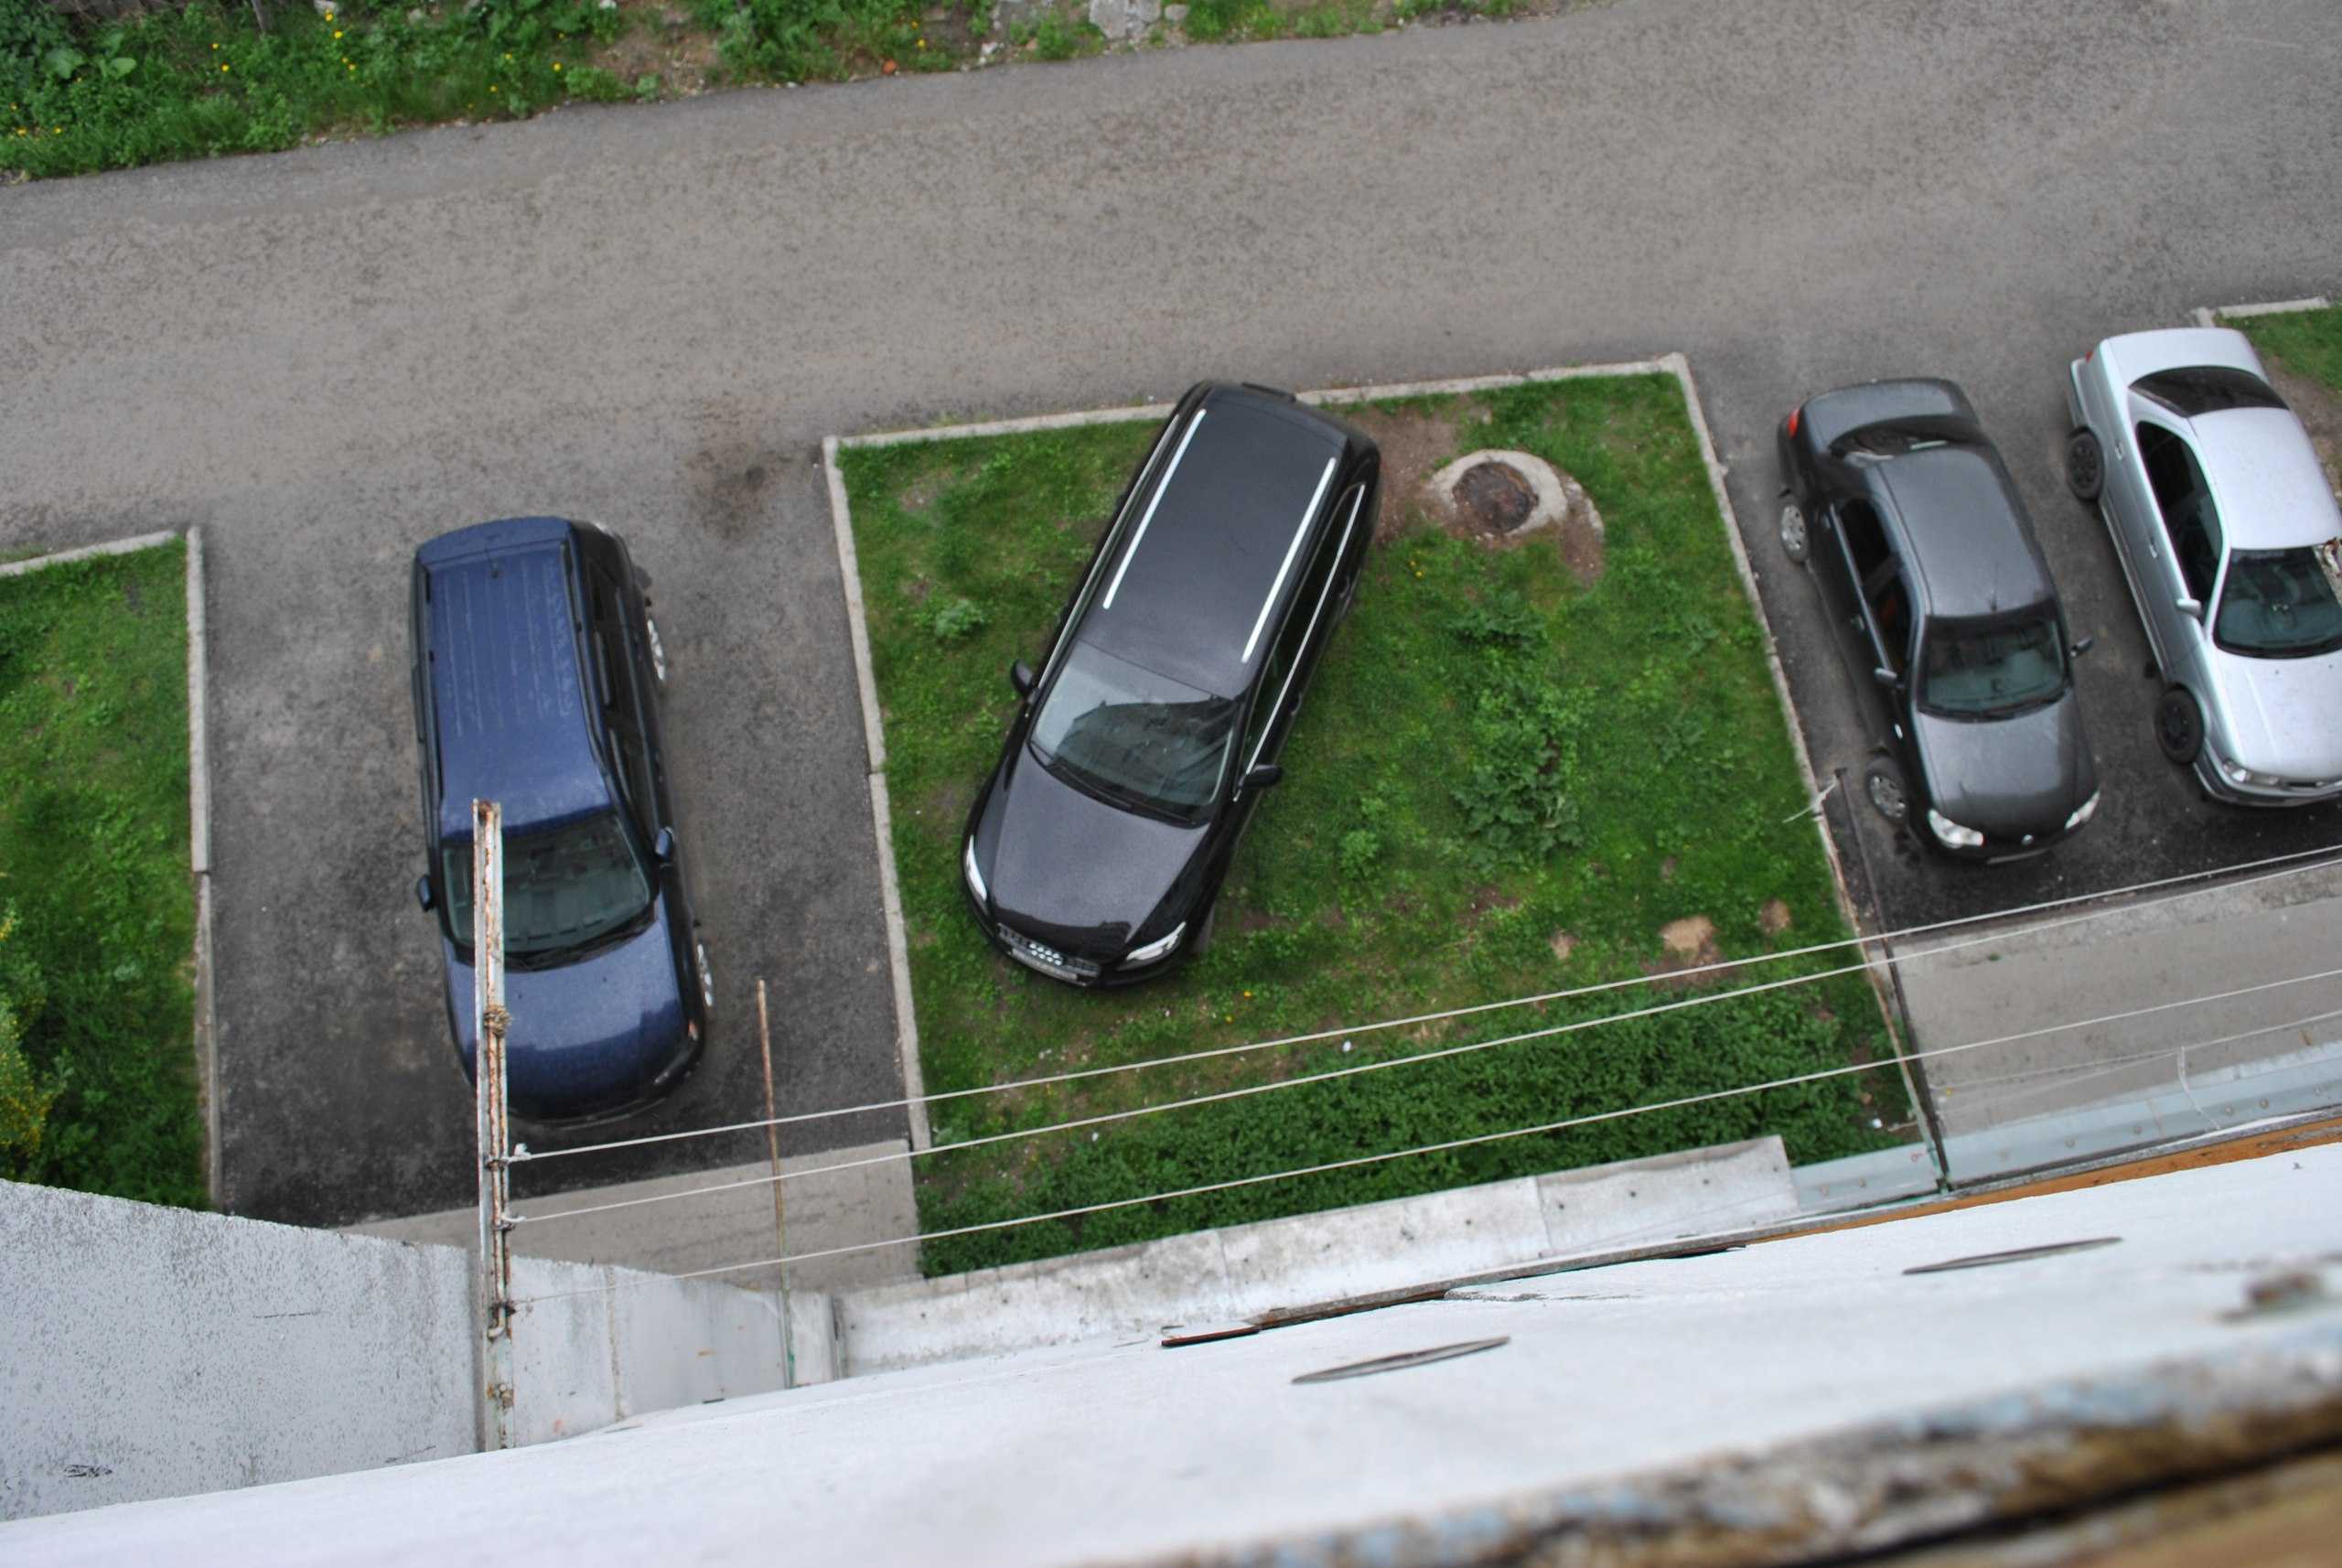 Парковка на зеленой зоне. Парковка на газоне. Припарковался на газоне. Парковка на газоне во дворе. Штраф за парковку на газоне во дворе.